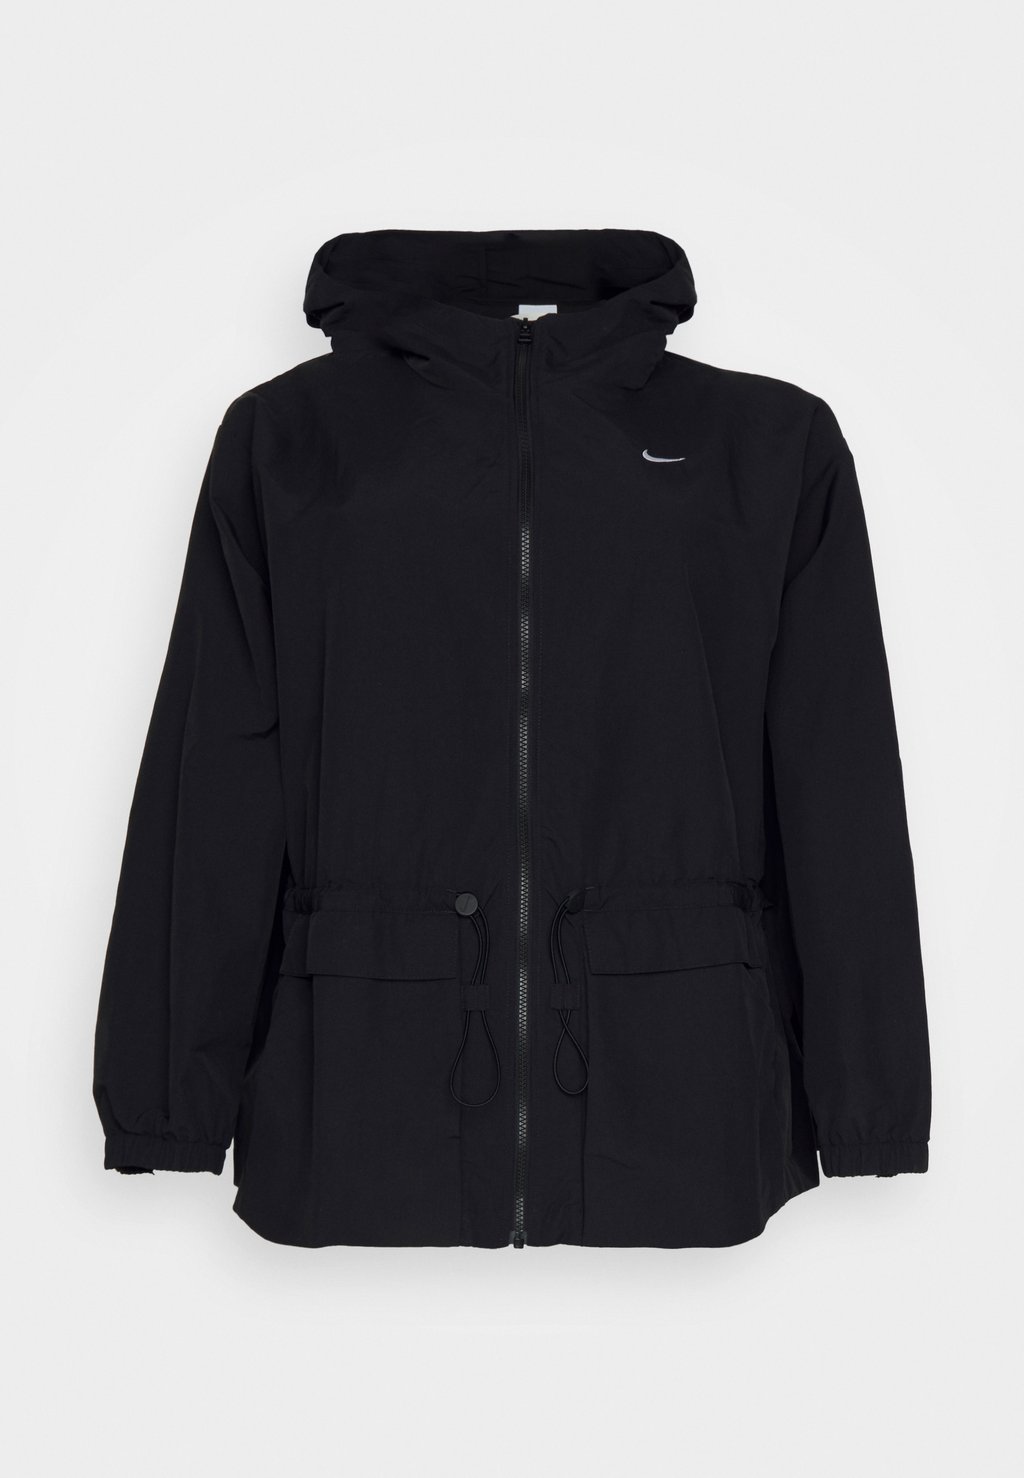 Легкая куртка Trend Nike, черный